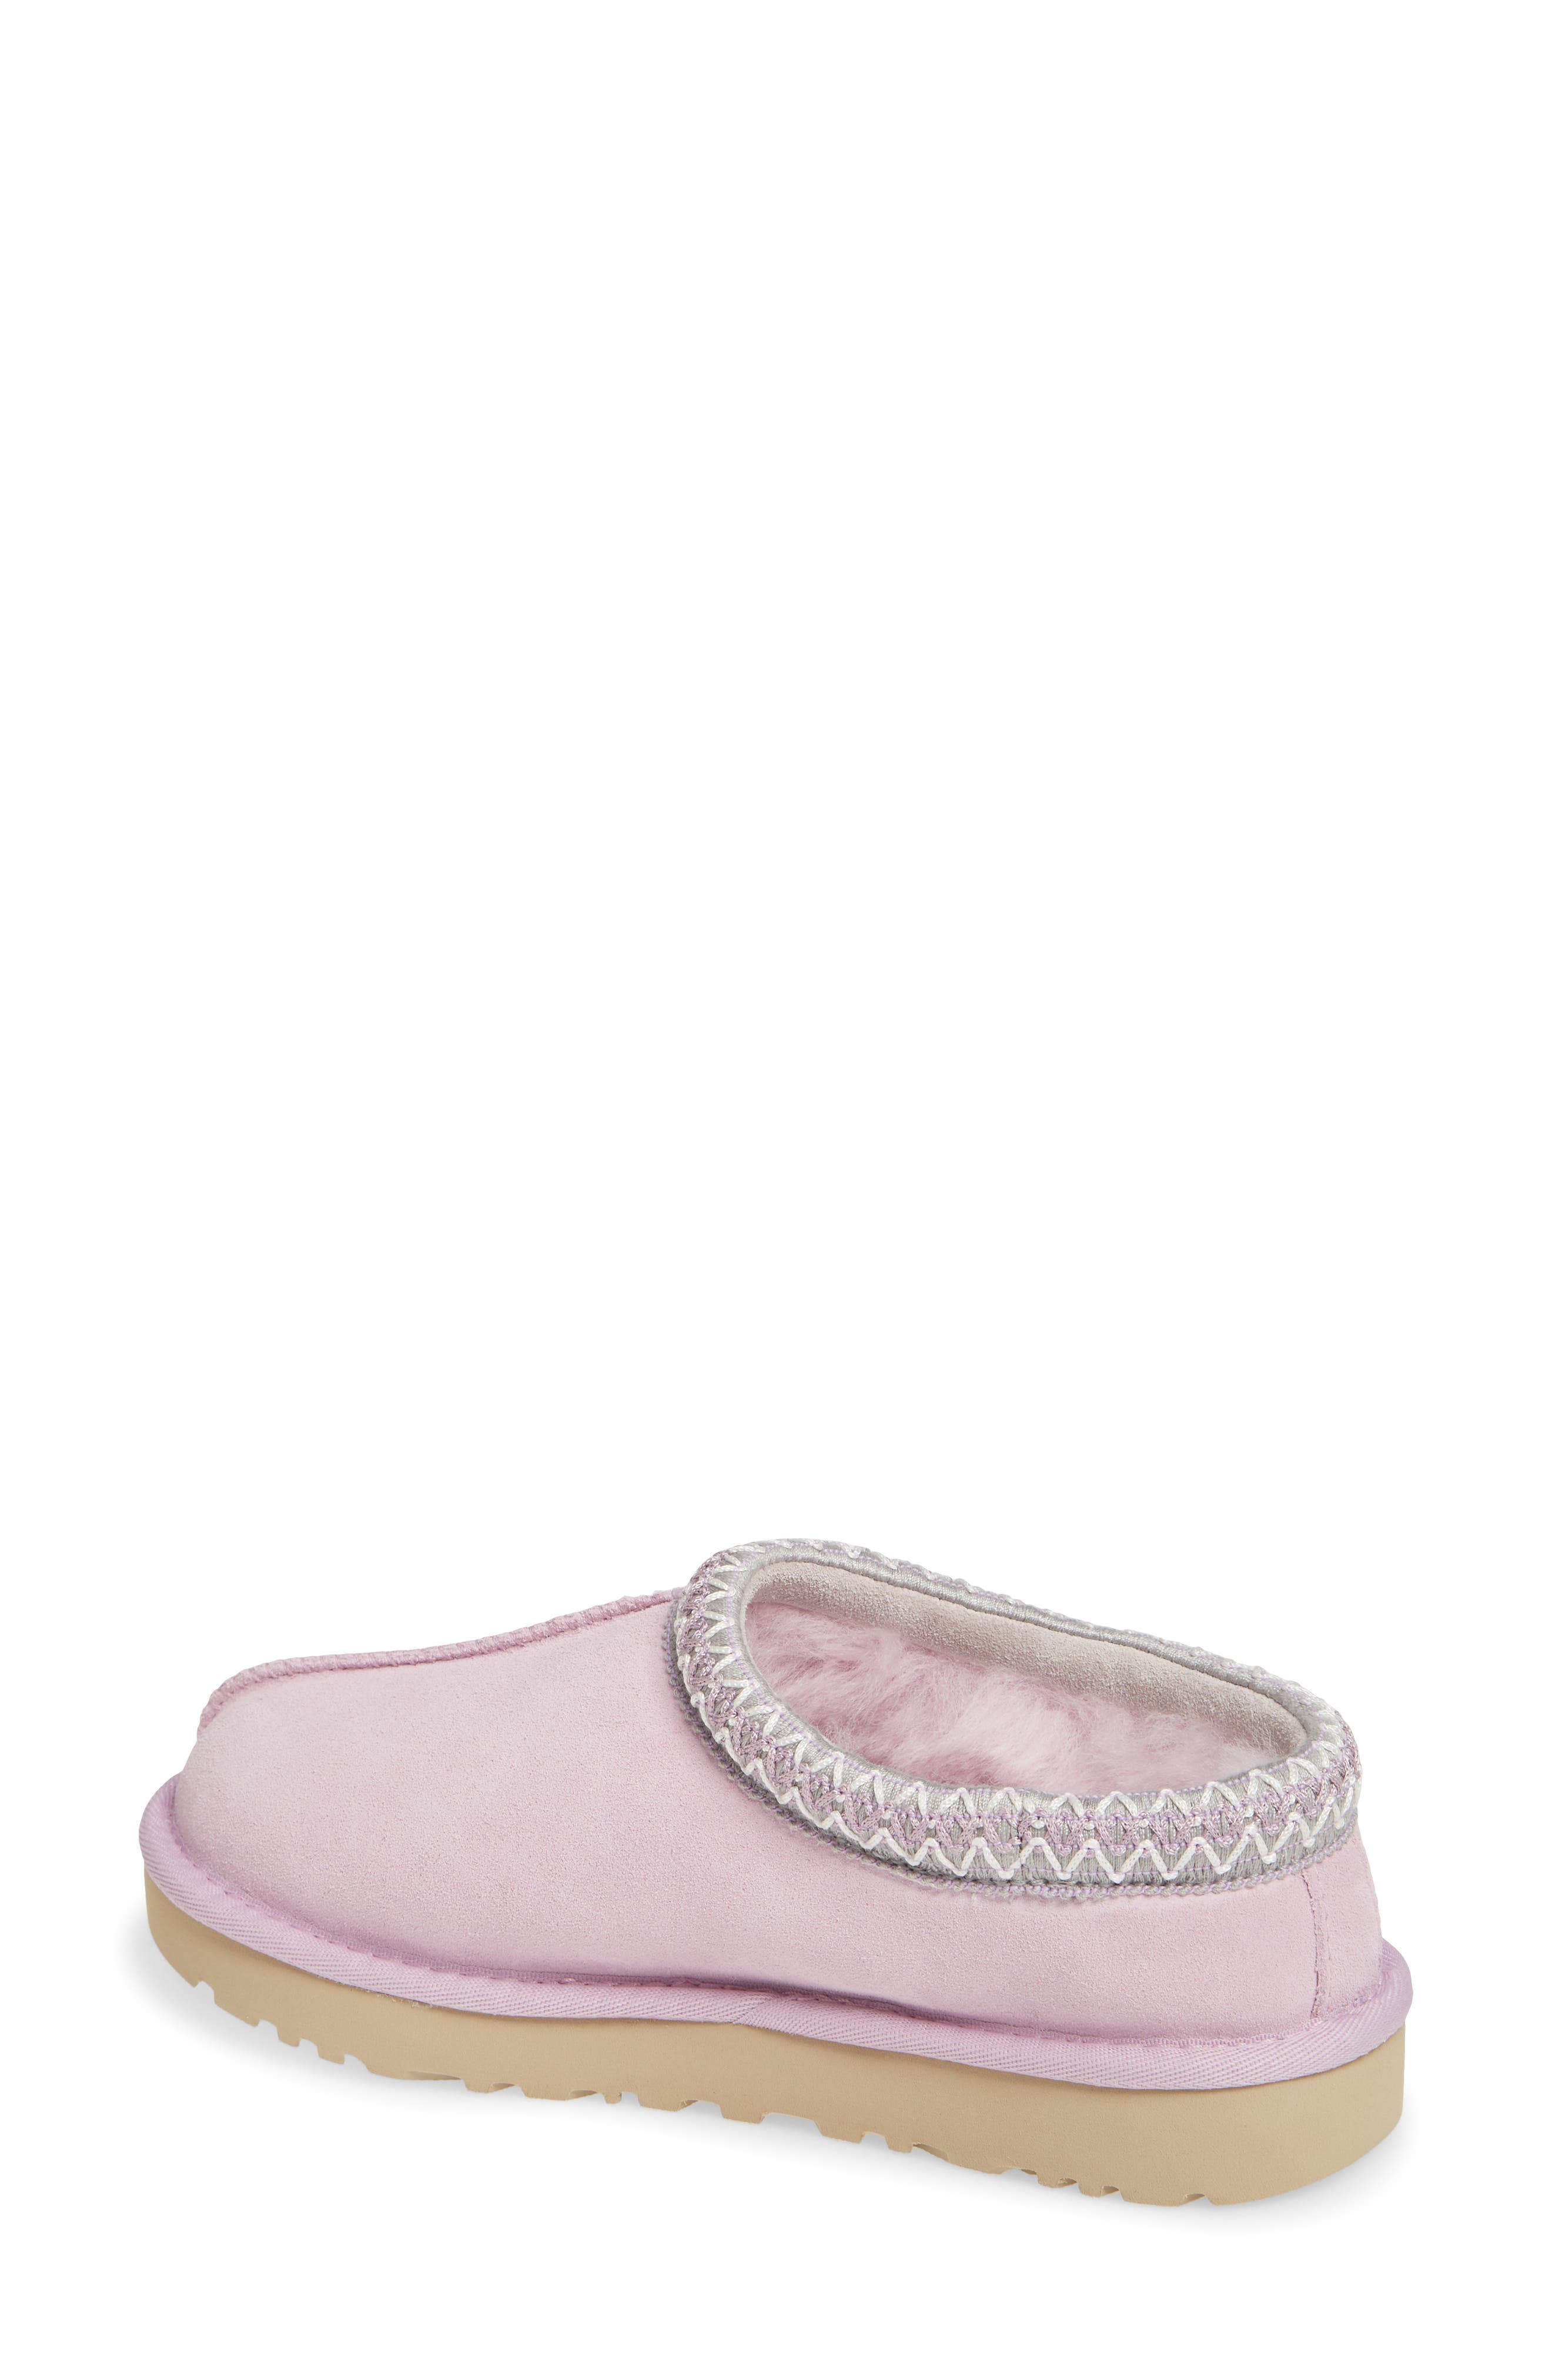 ugg tasman slippers pink